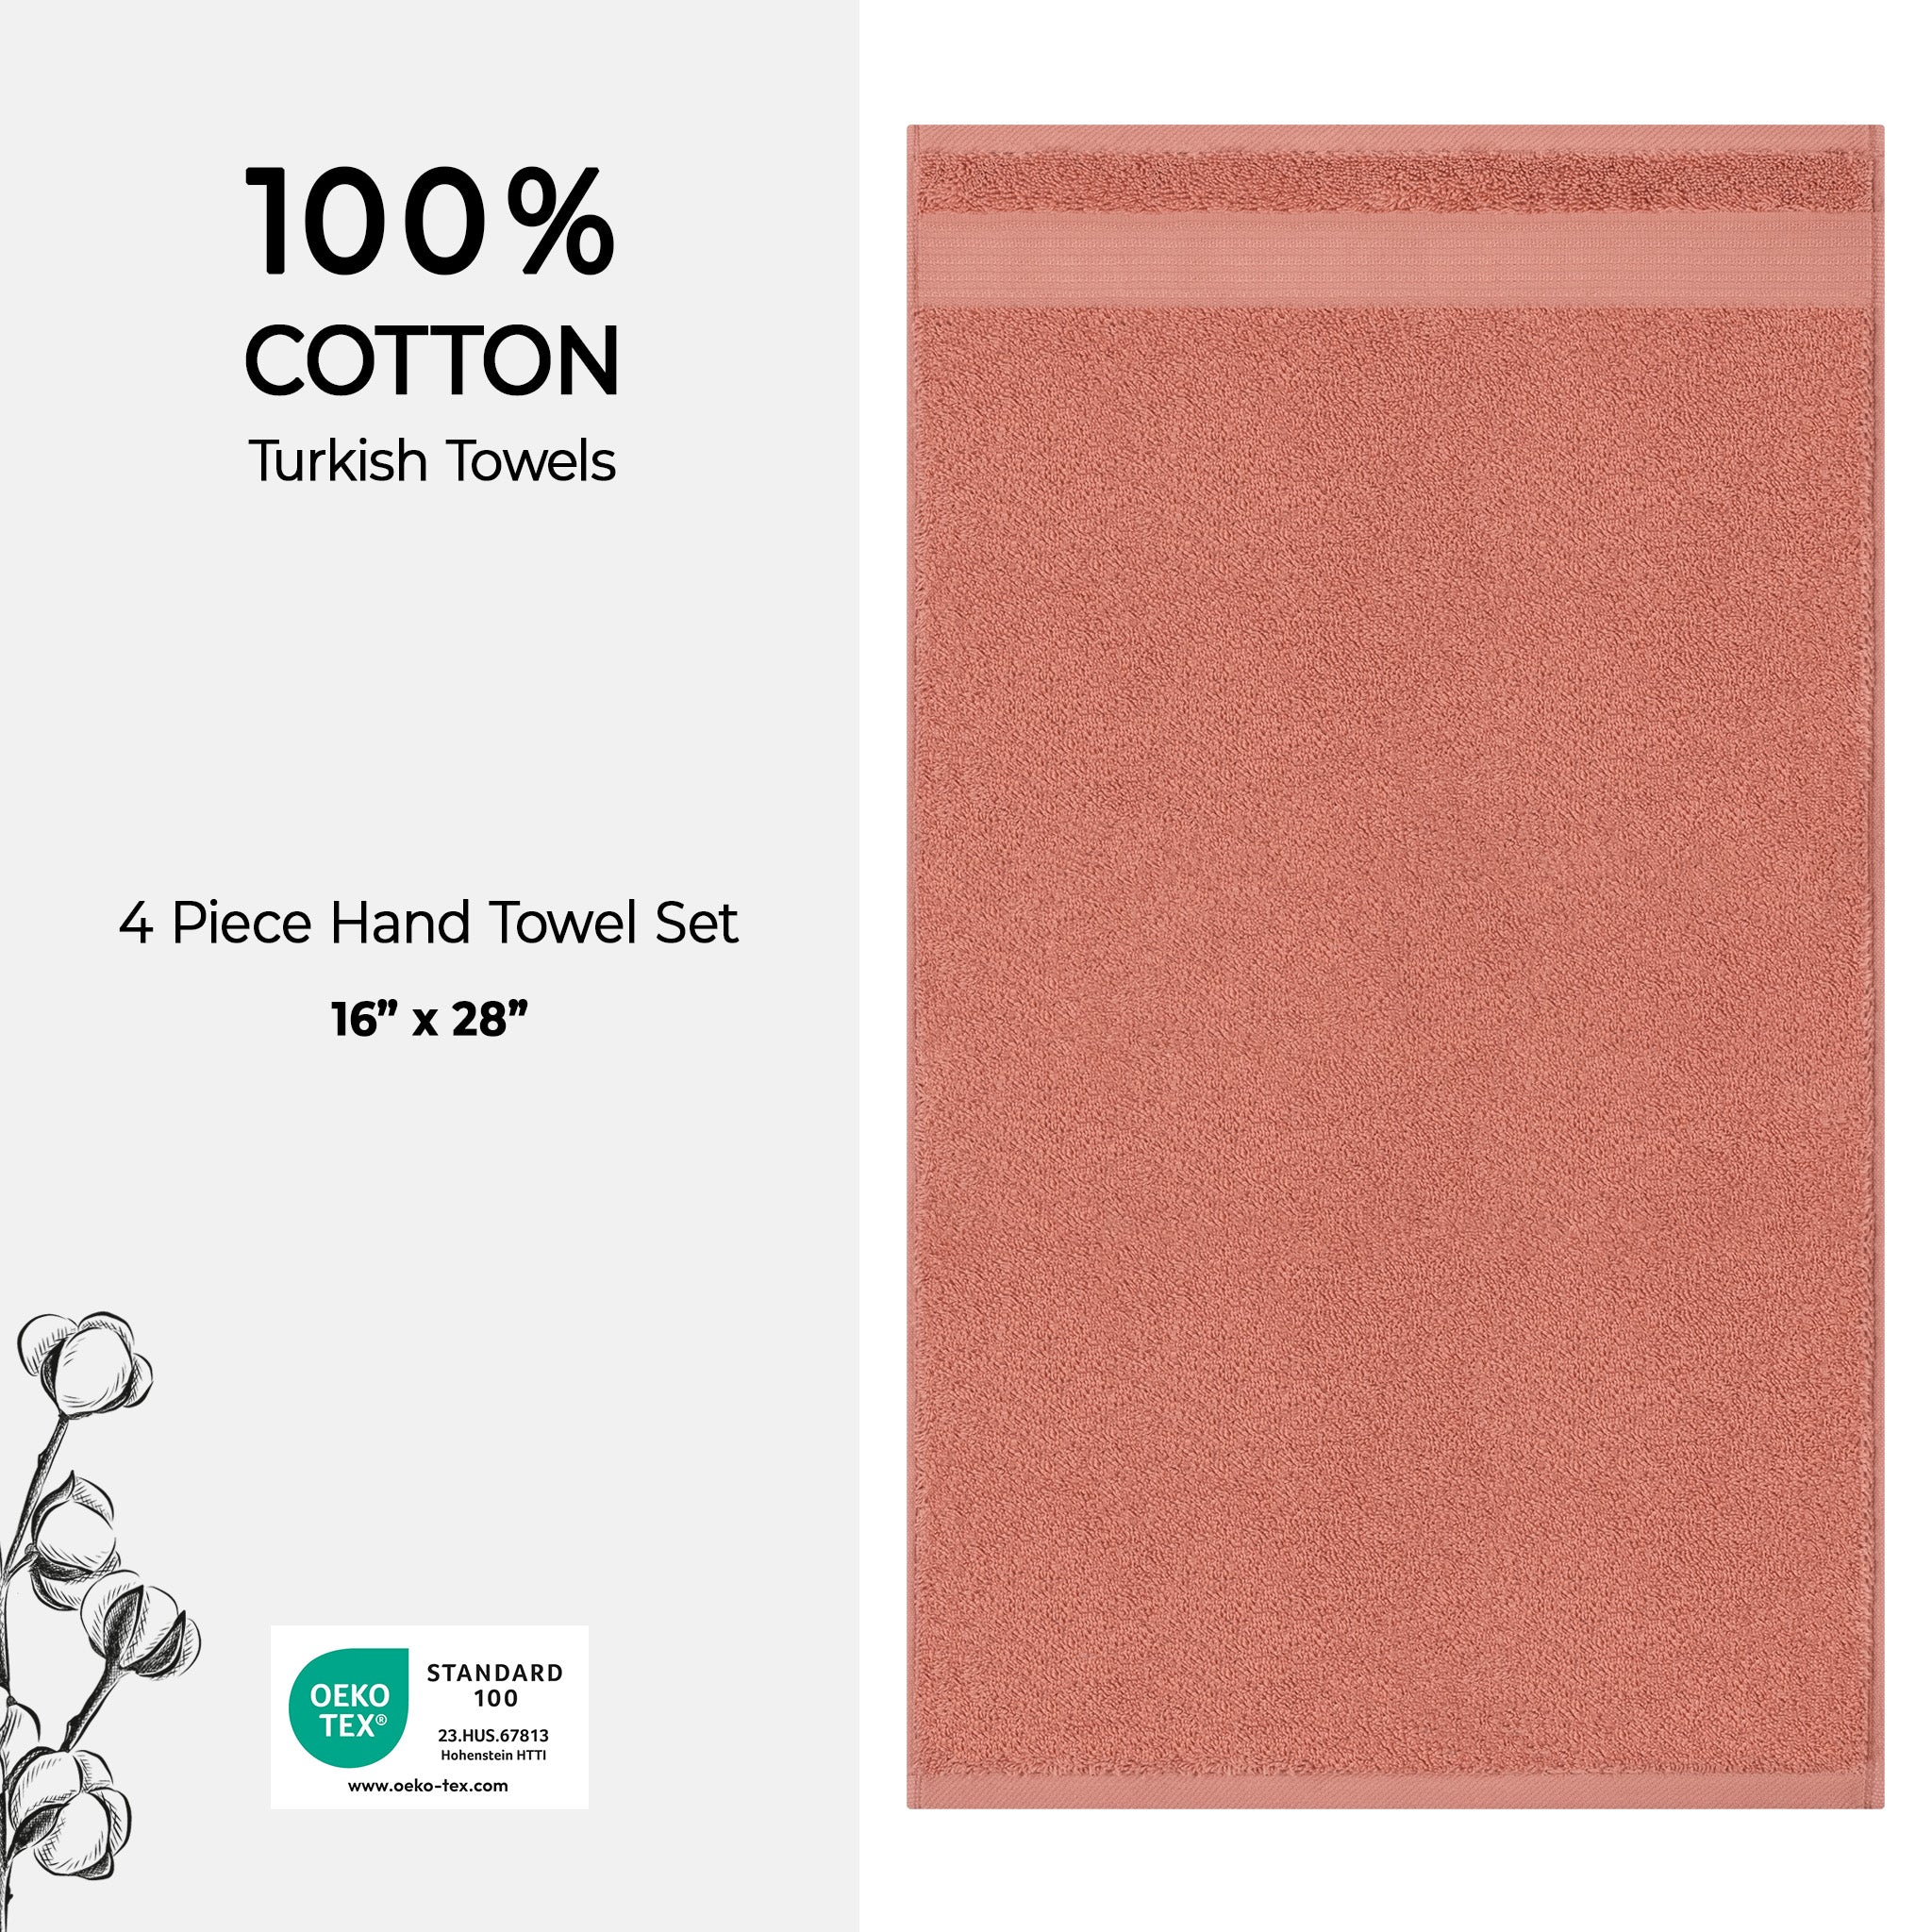 American Soft Linen Bekos 100% Cotton Turkish Towels, 4 Piece Hand Towel Set -coral-04